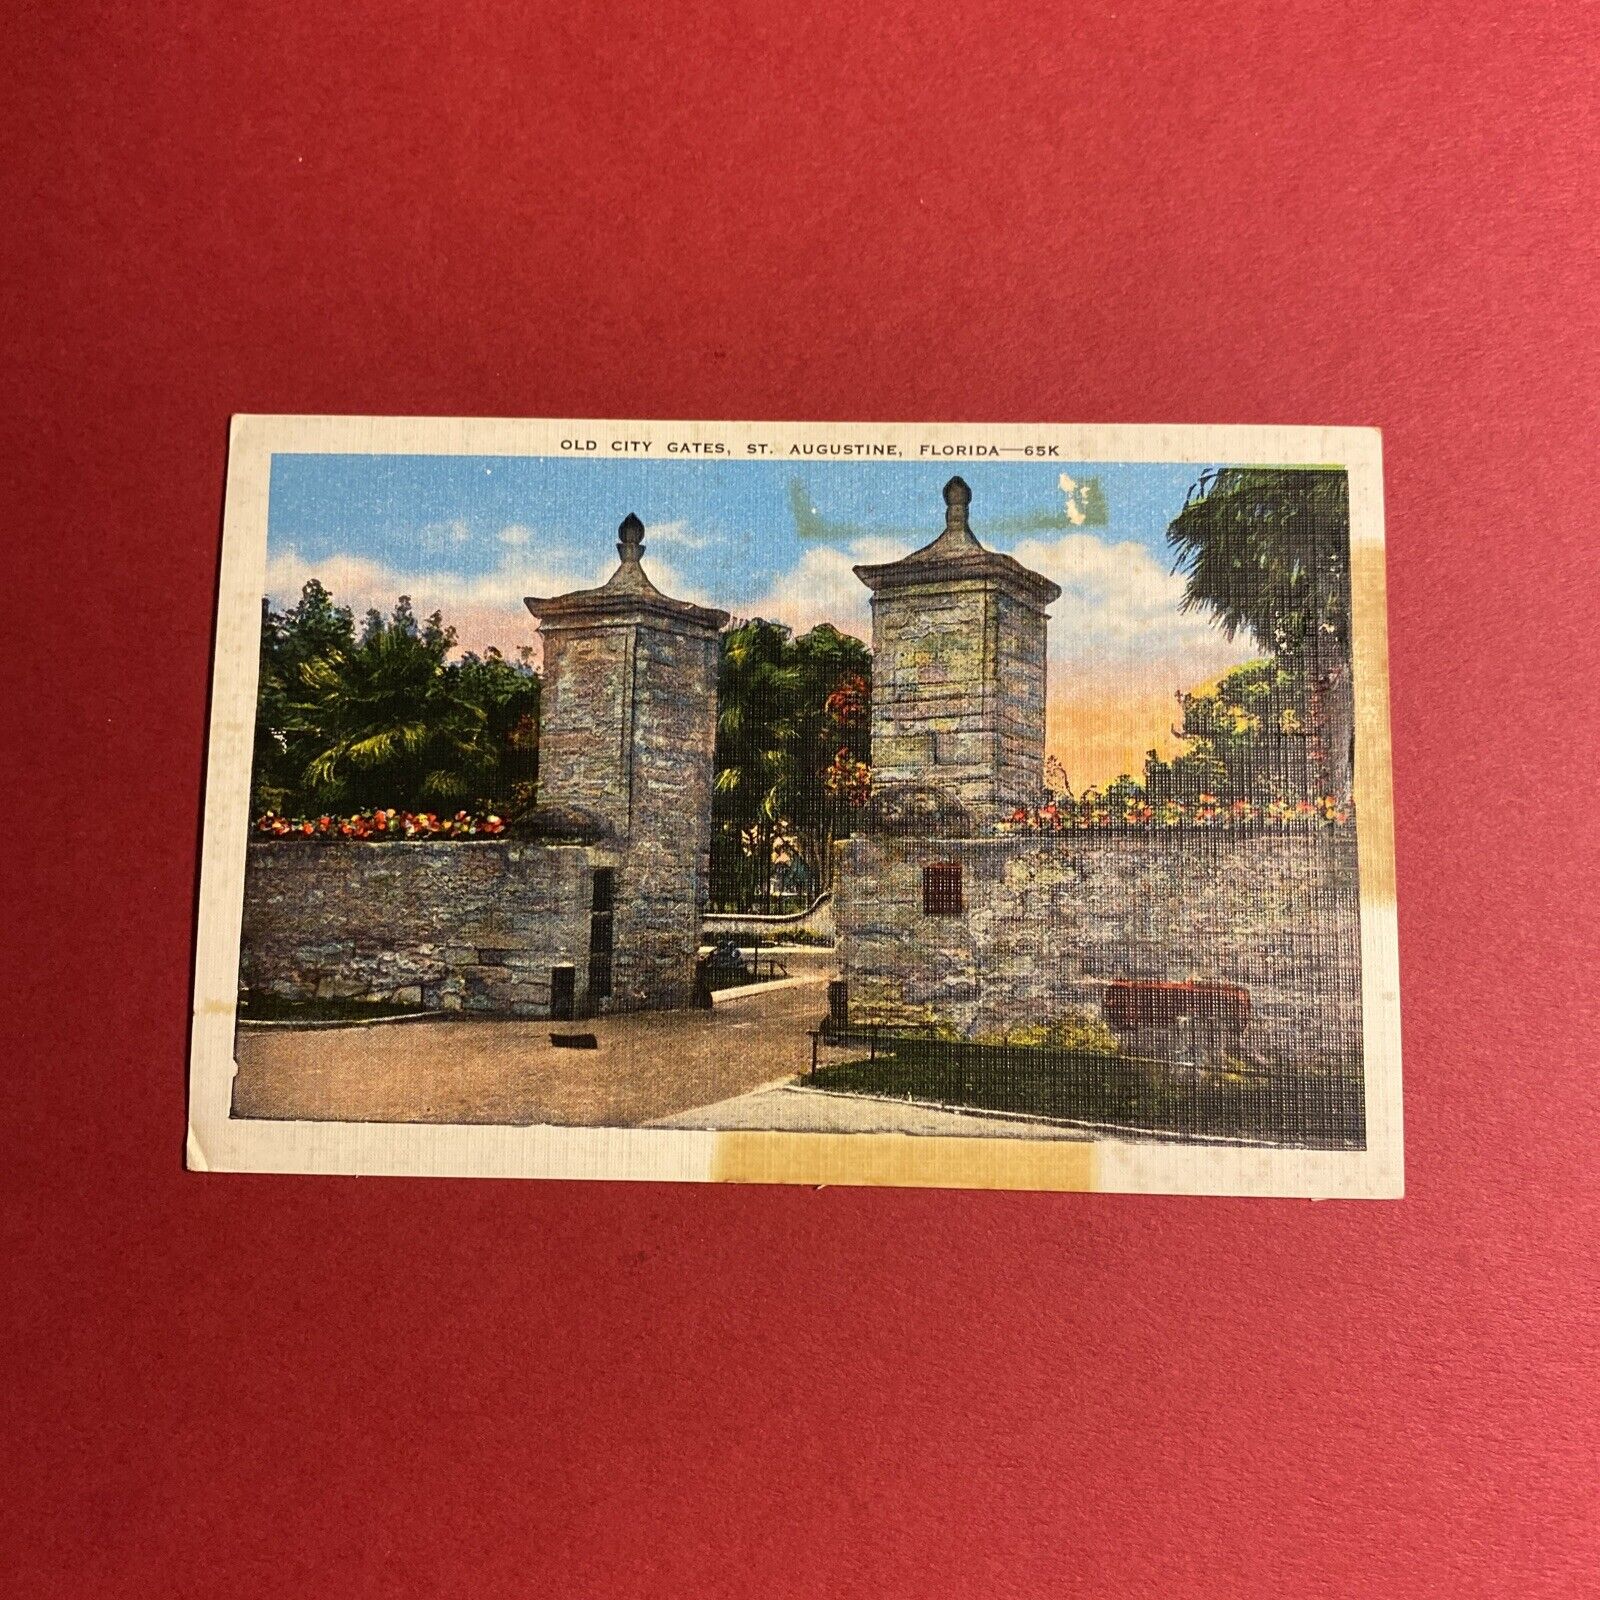 (1) Vintage Postcard Of The Old City Gates Of St. Augustine, Florida